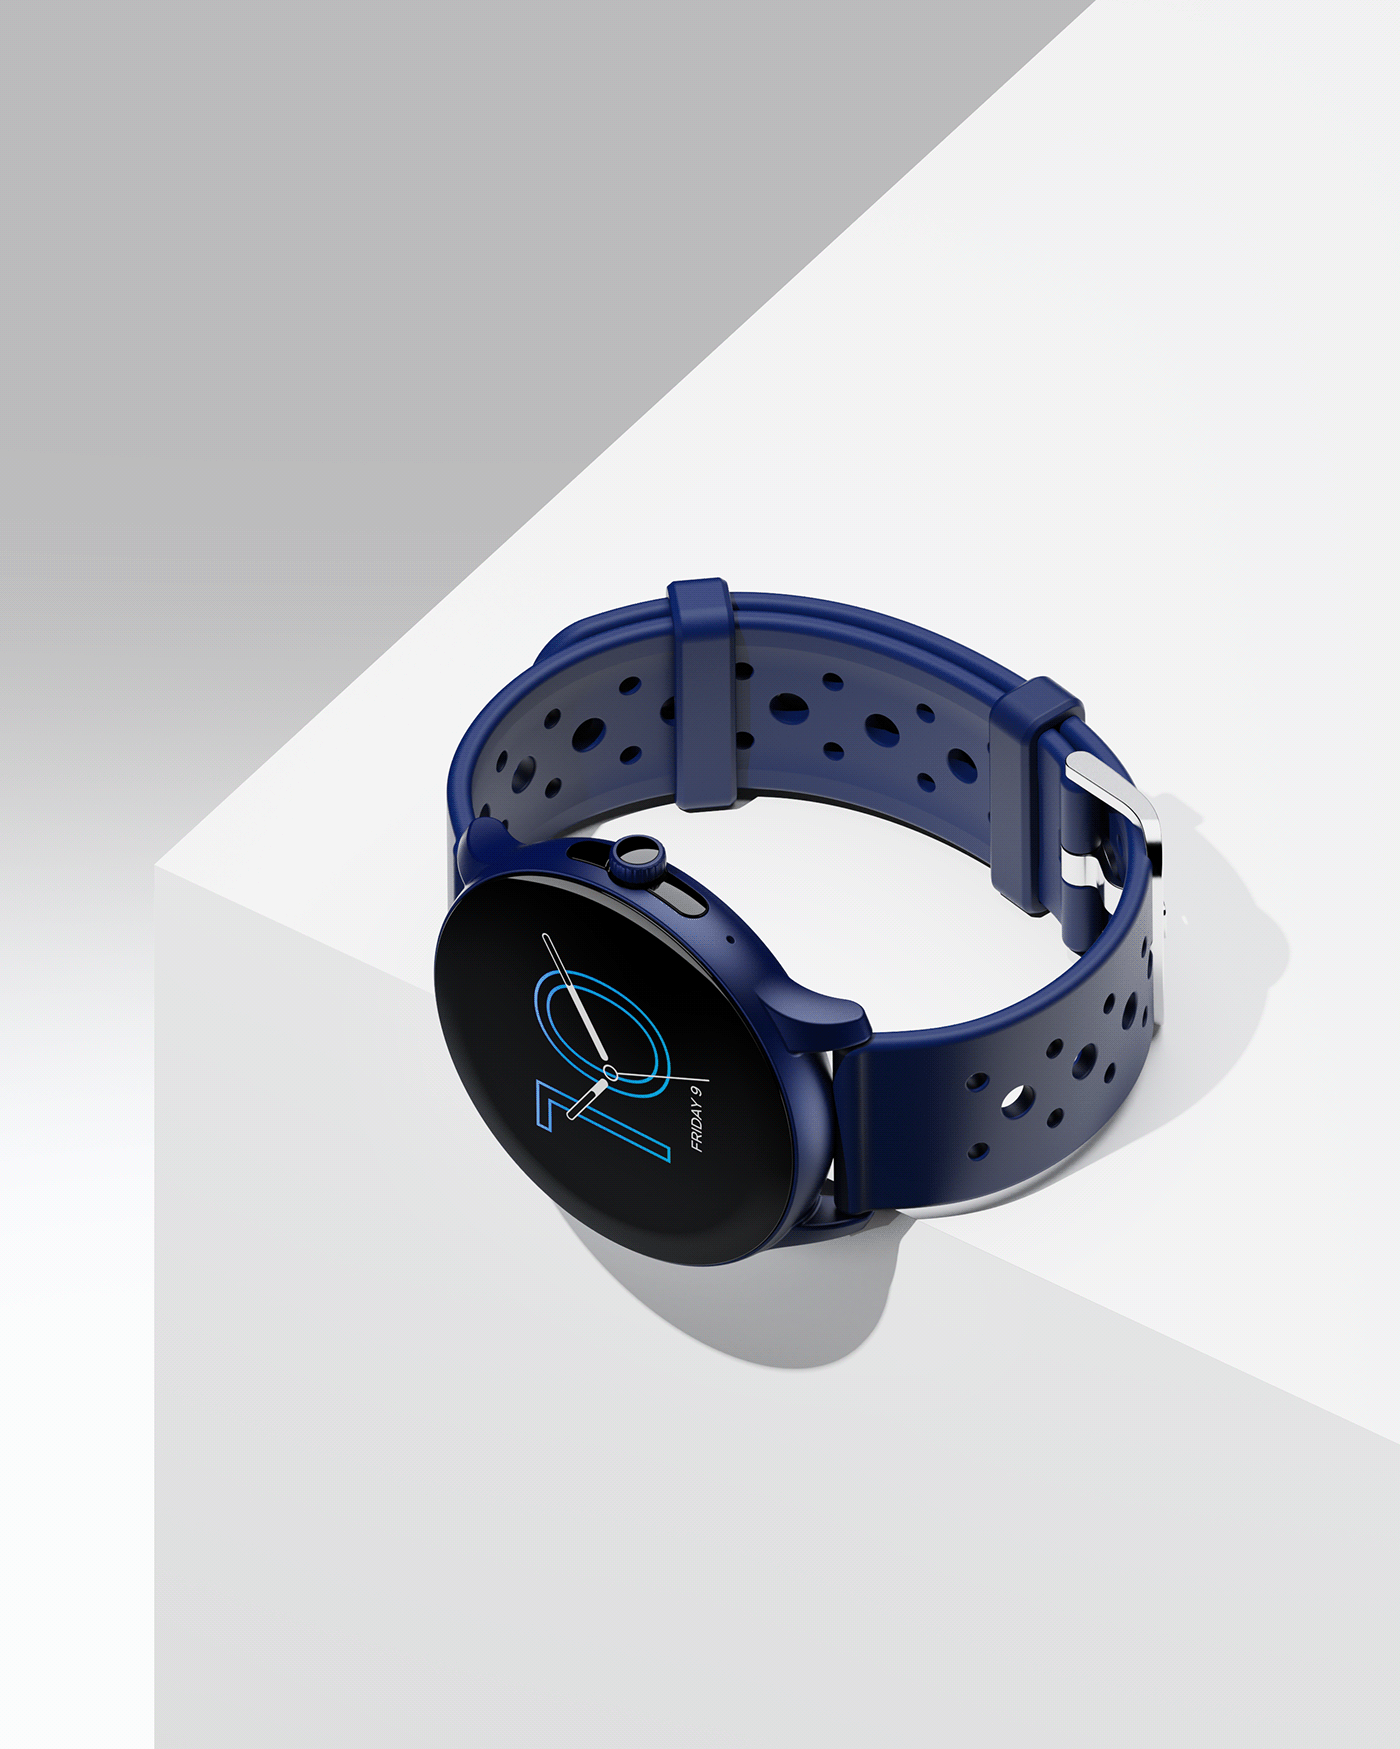 CGI industrial design  manufacturing portfolio product design  Render rendering smart watch visualization watch design